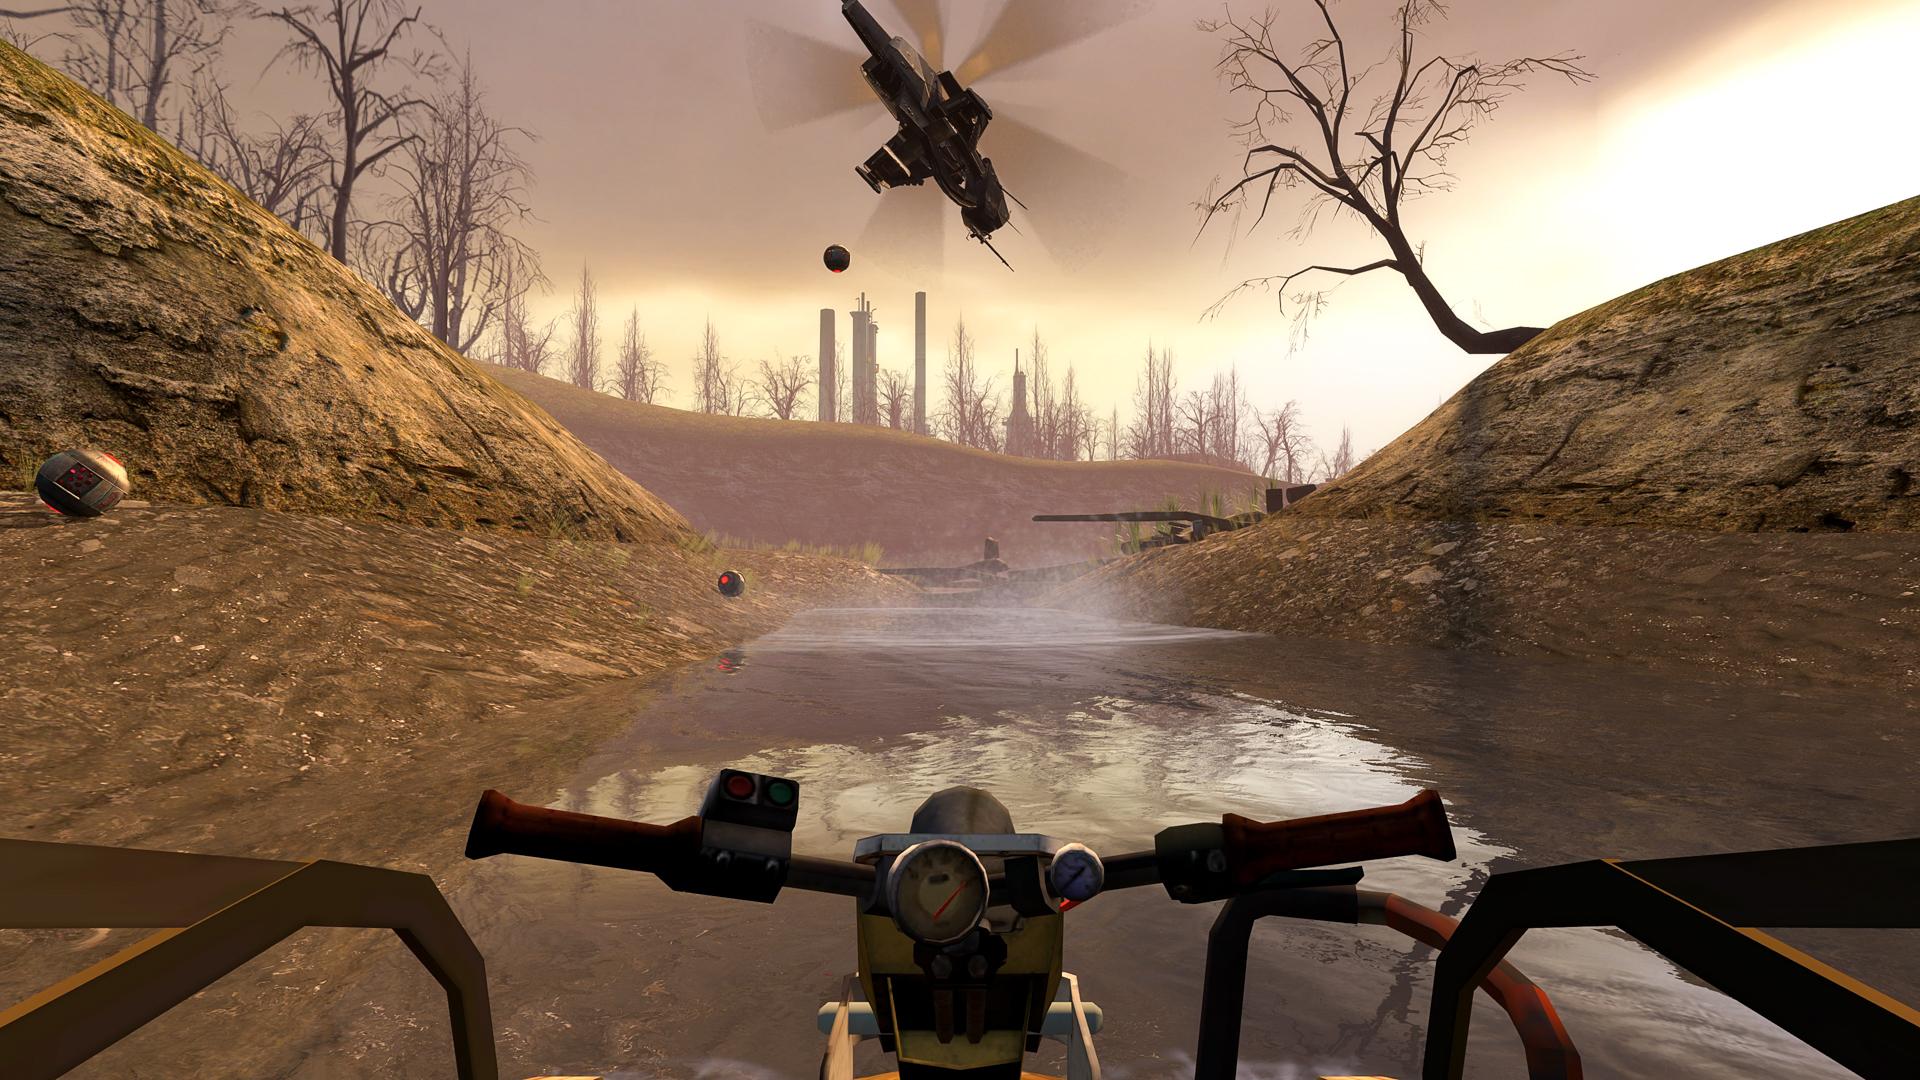 Screenshot №9 from game Half-Life 2: Update